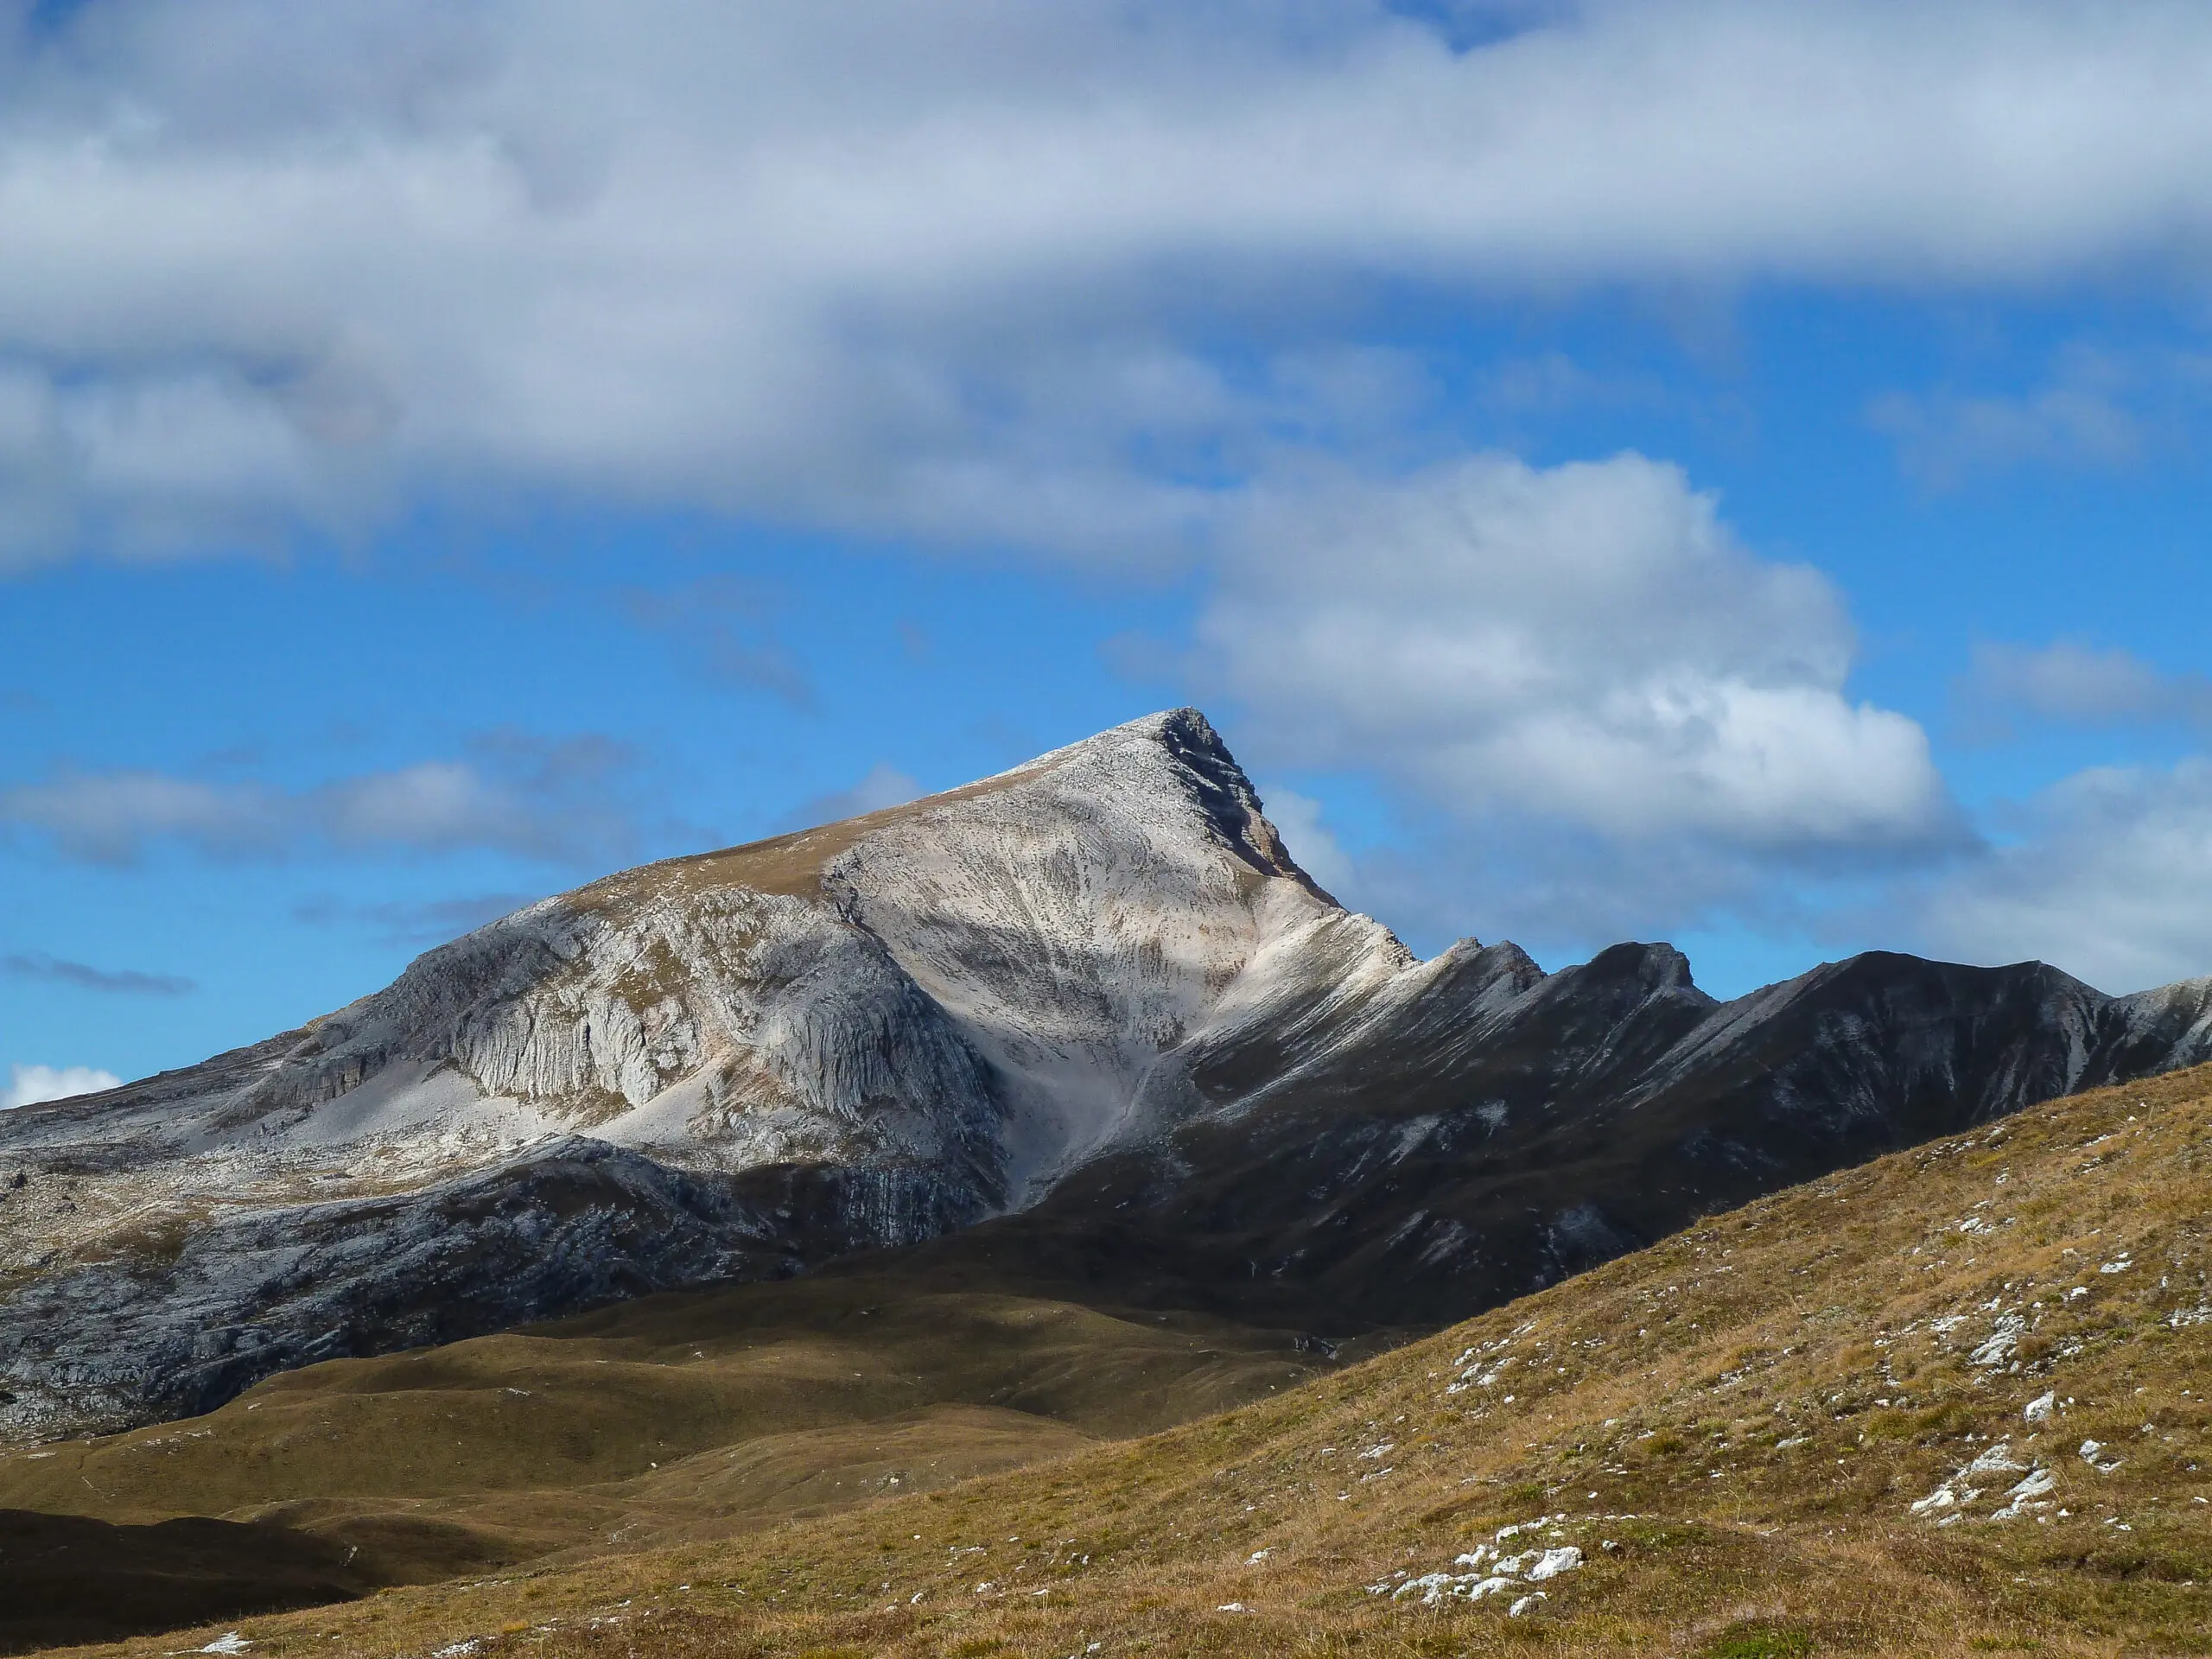 Wandbild (3021) Dolomiten 4 präsentiert: Landschaften,Berge